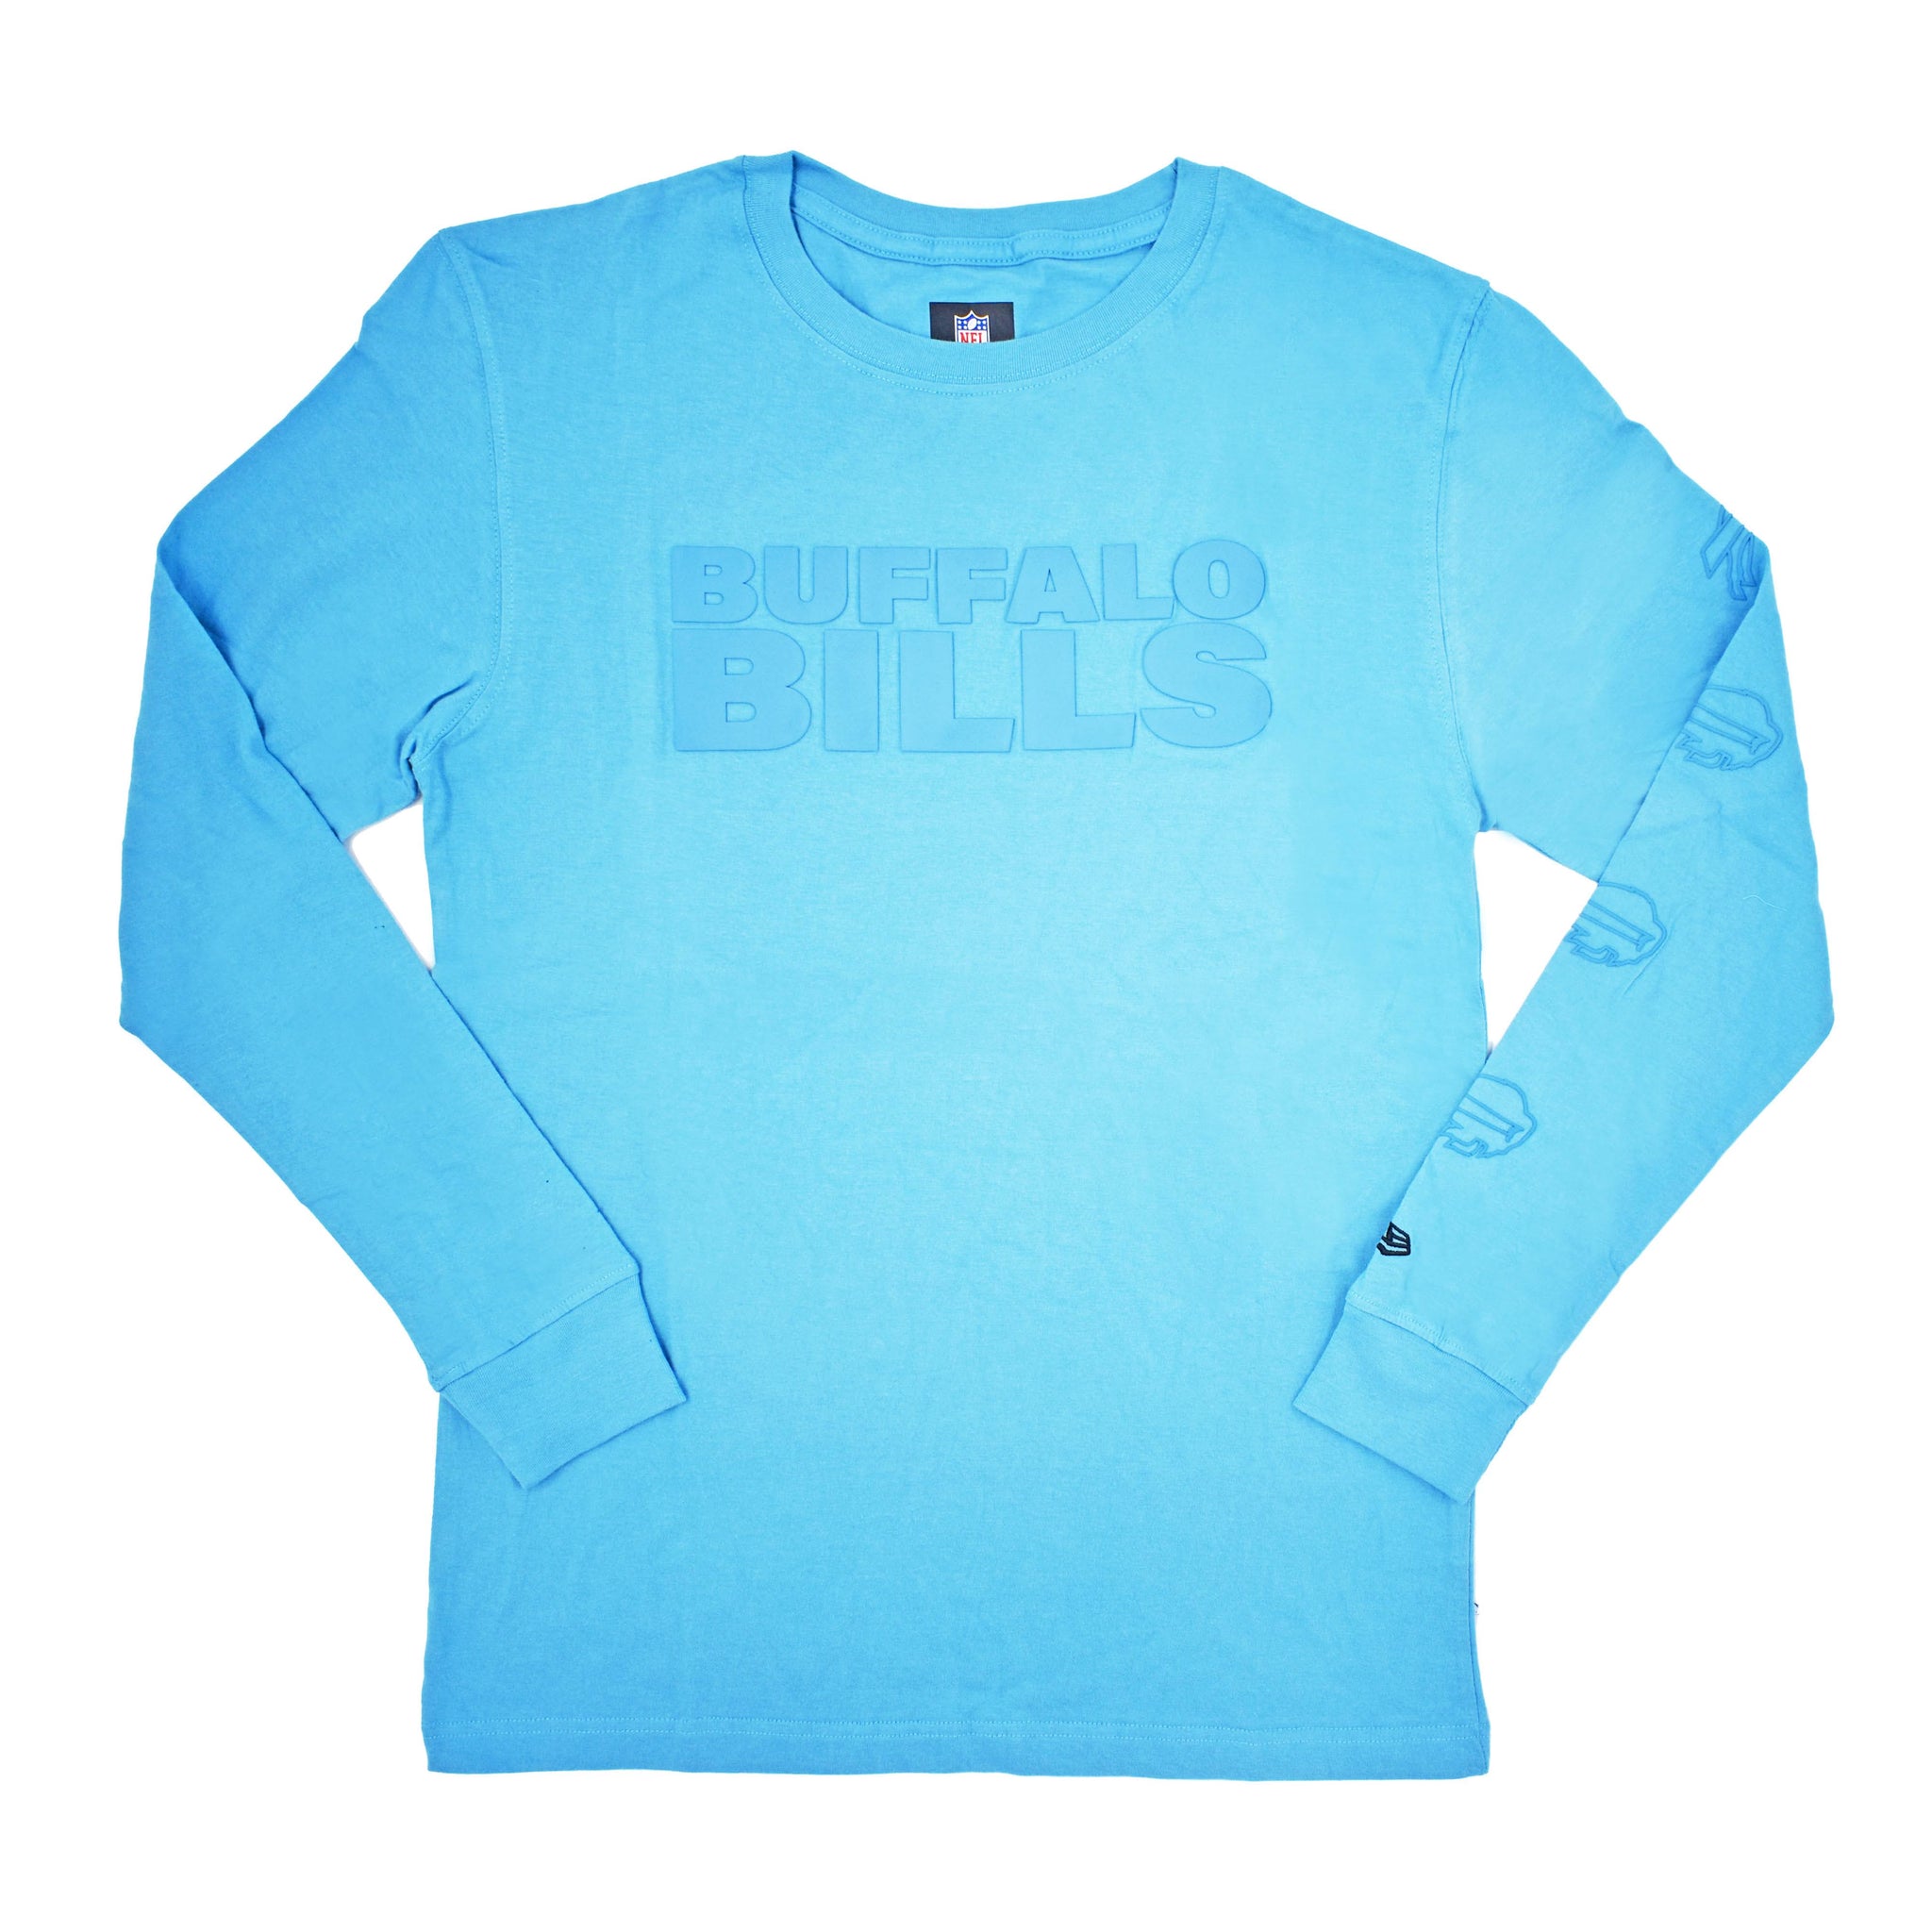 bflo store New Era Buffalo Bills Light Blue With Raised Lettering and Logo Long Sleeve Shirt